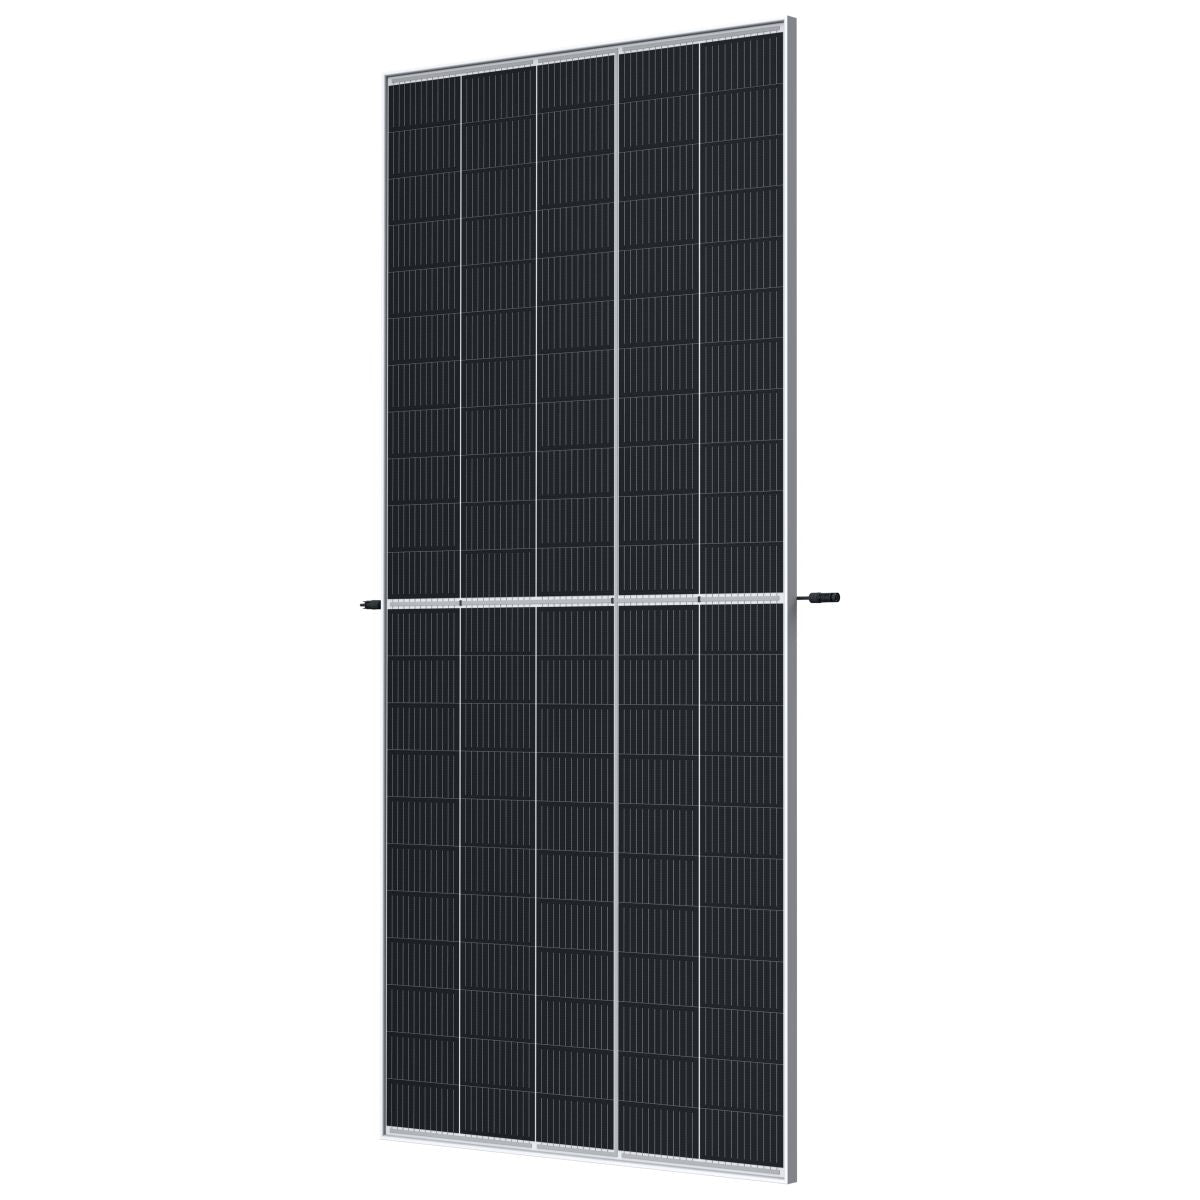 Trina TSM-550DE19 550W Solar Panel